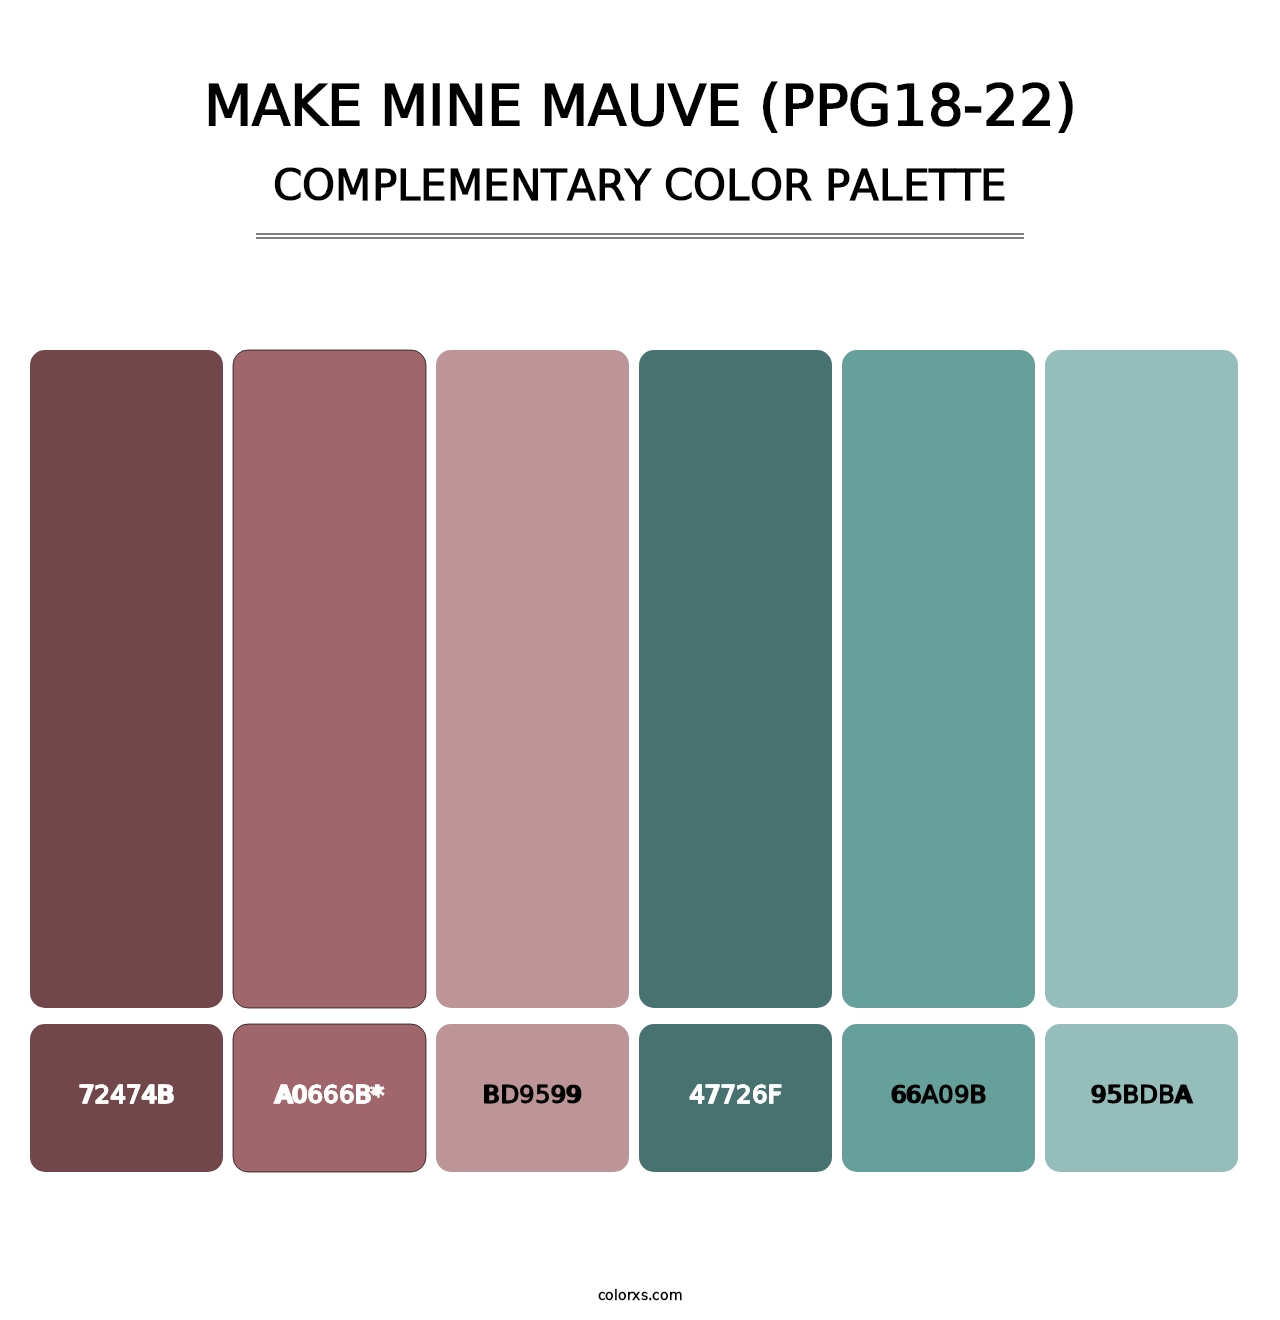 Make Mine Mauve (PPG18-22) - Complementary Color Palette